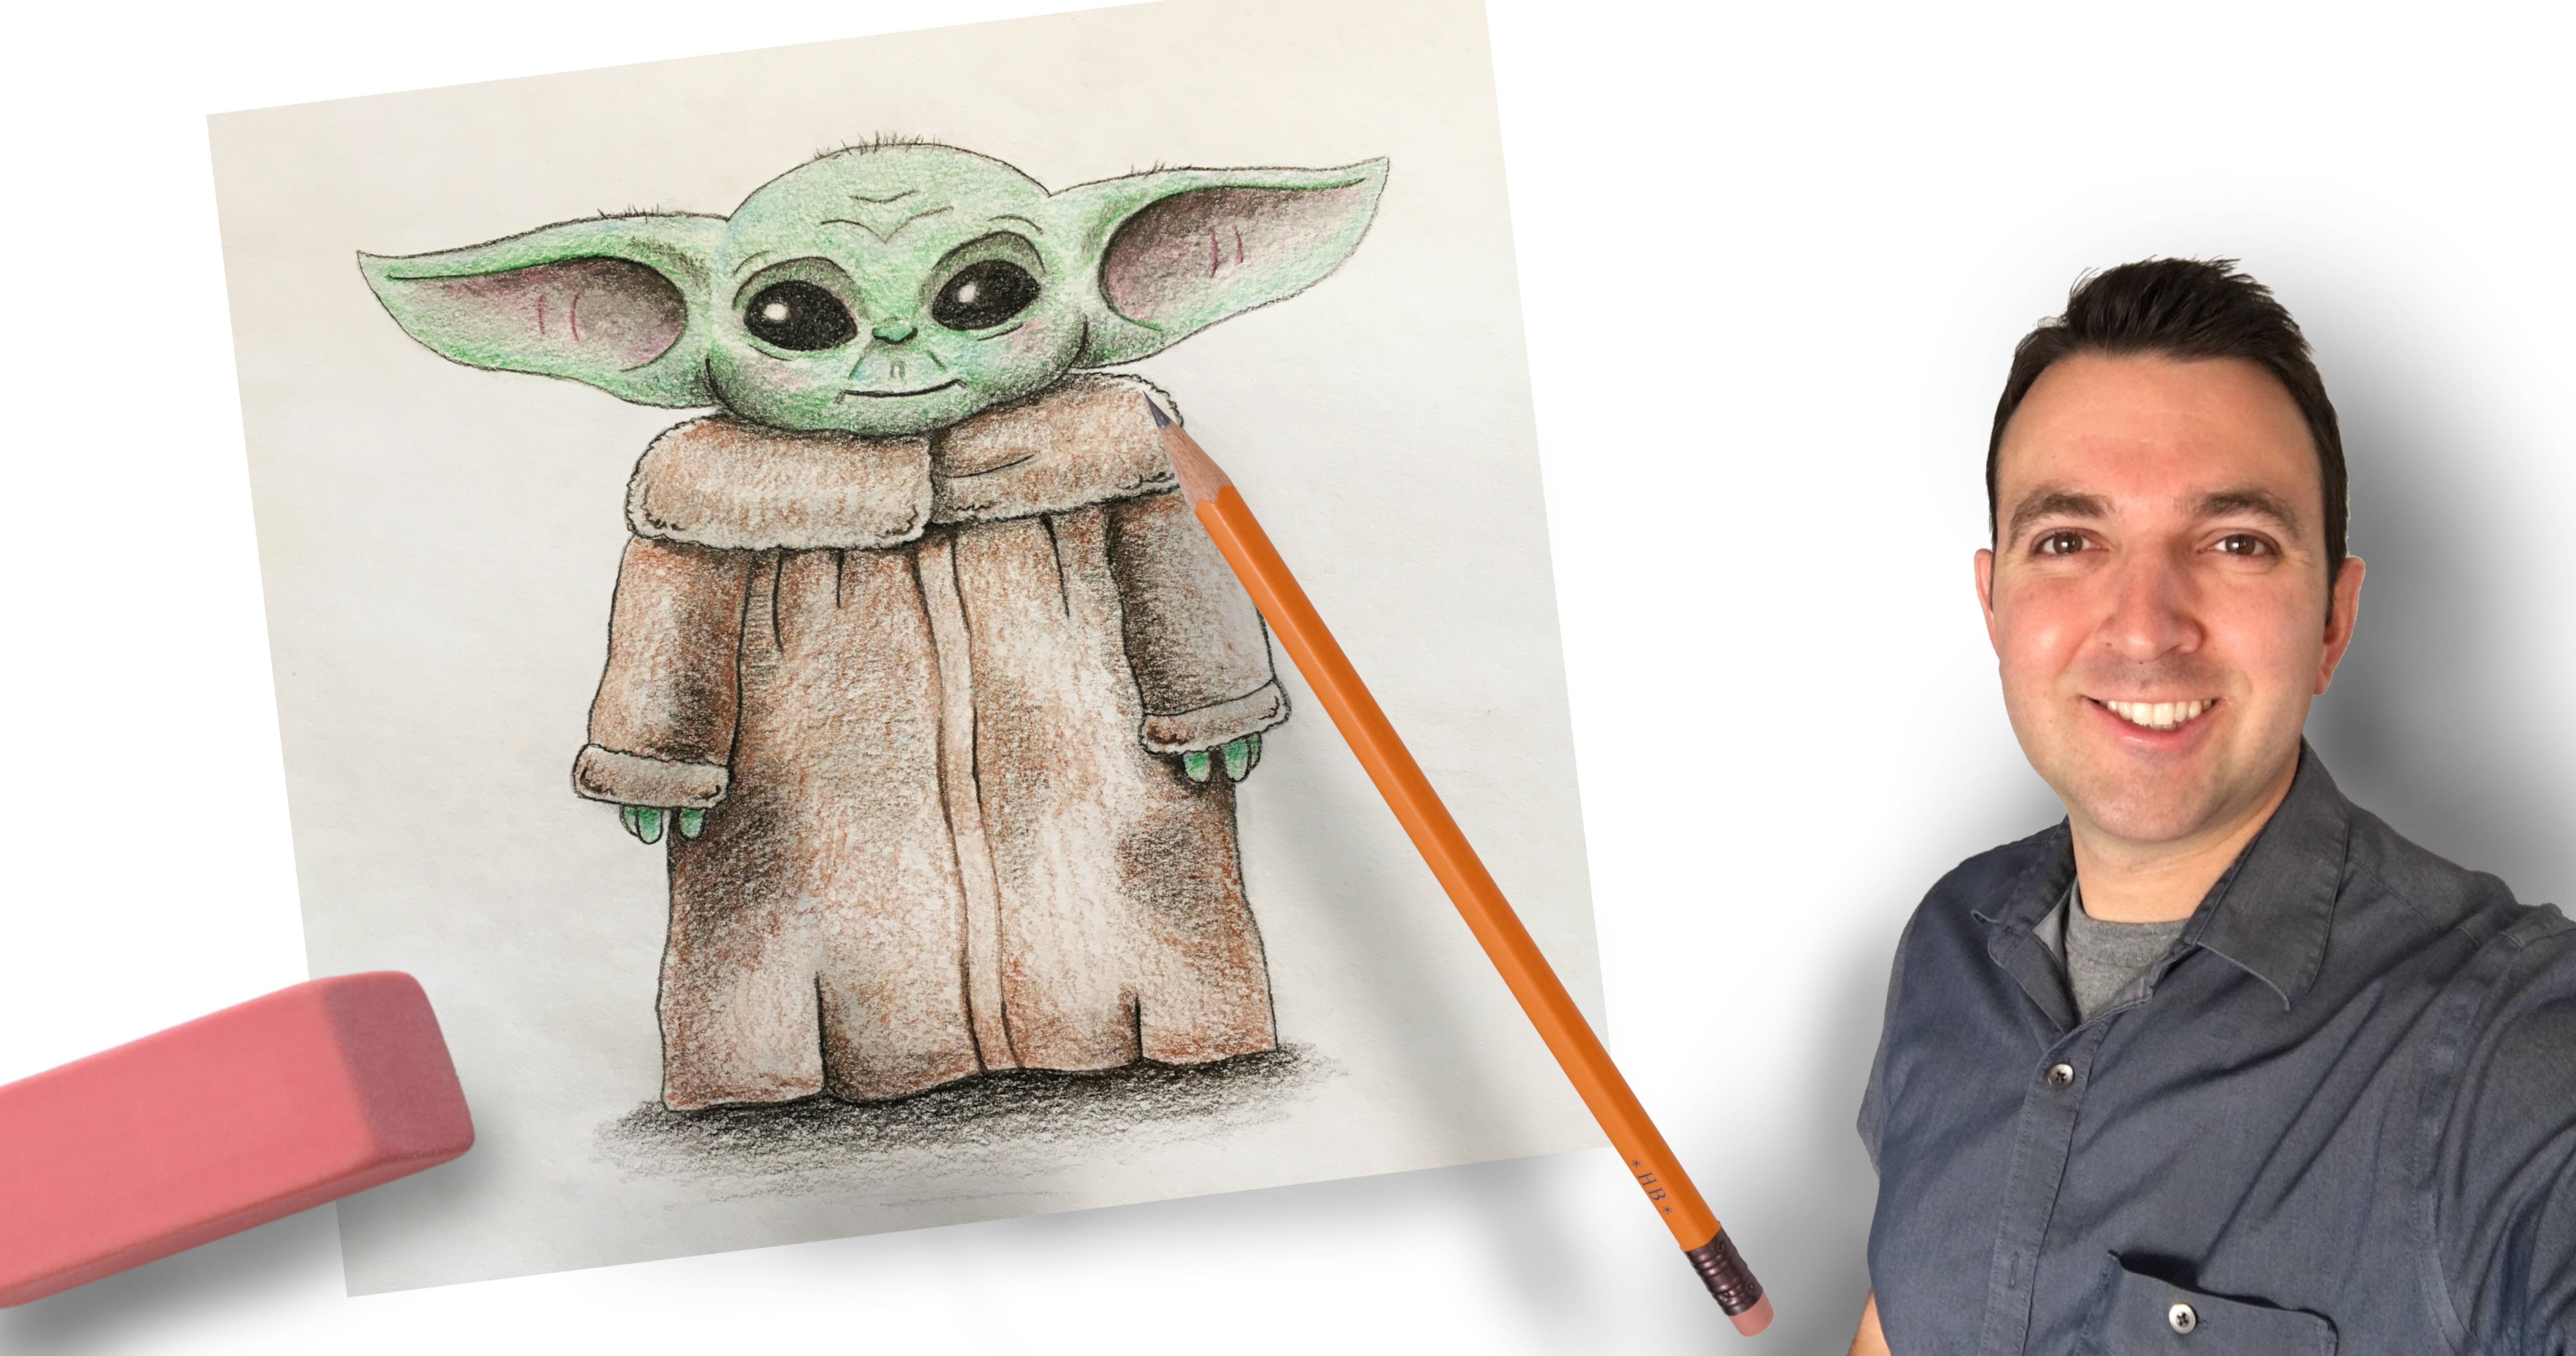 How To Draw Baby Yoda From The Mandalorian - 14 Baby Yoda Drawing Tutorials